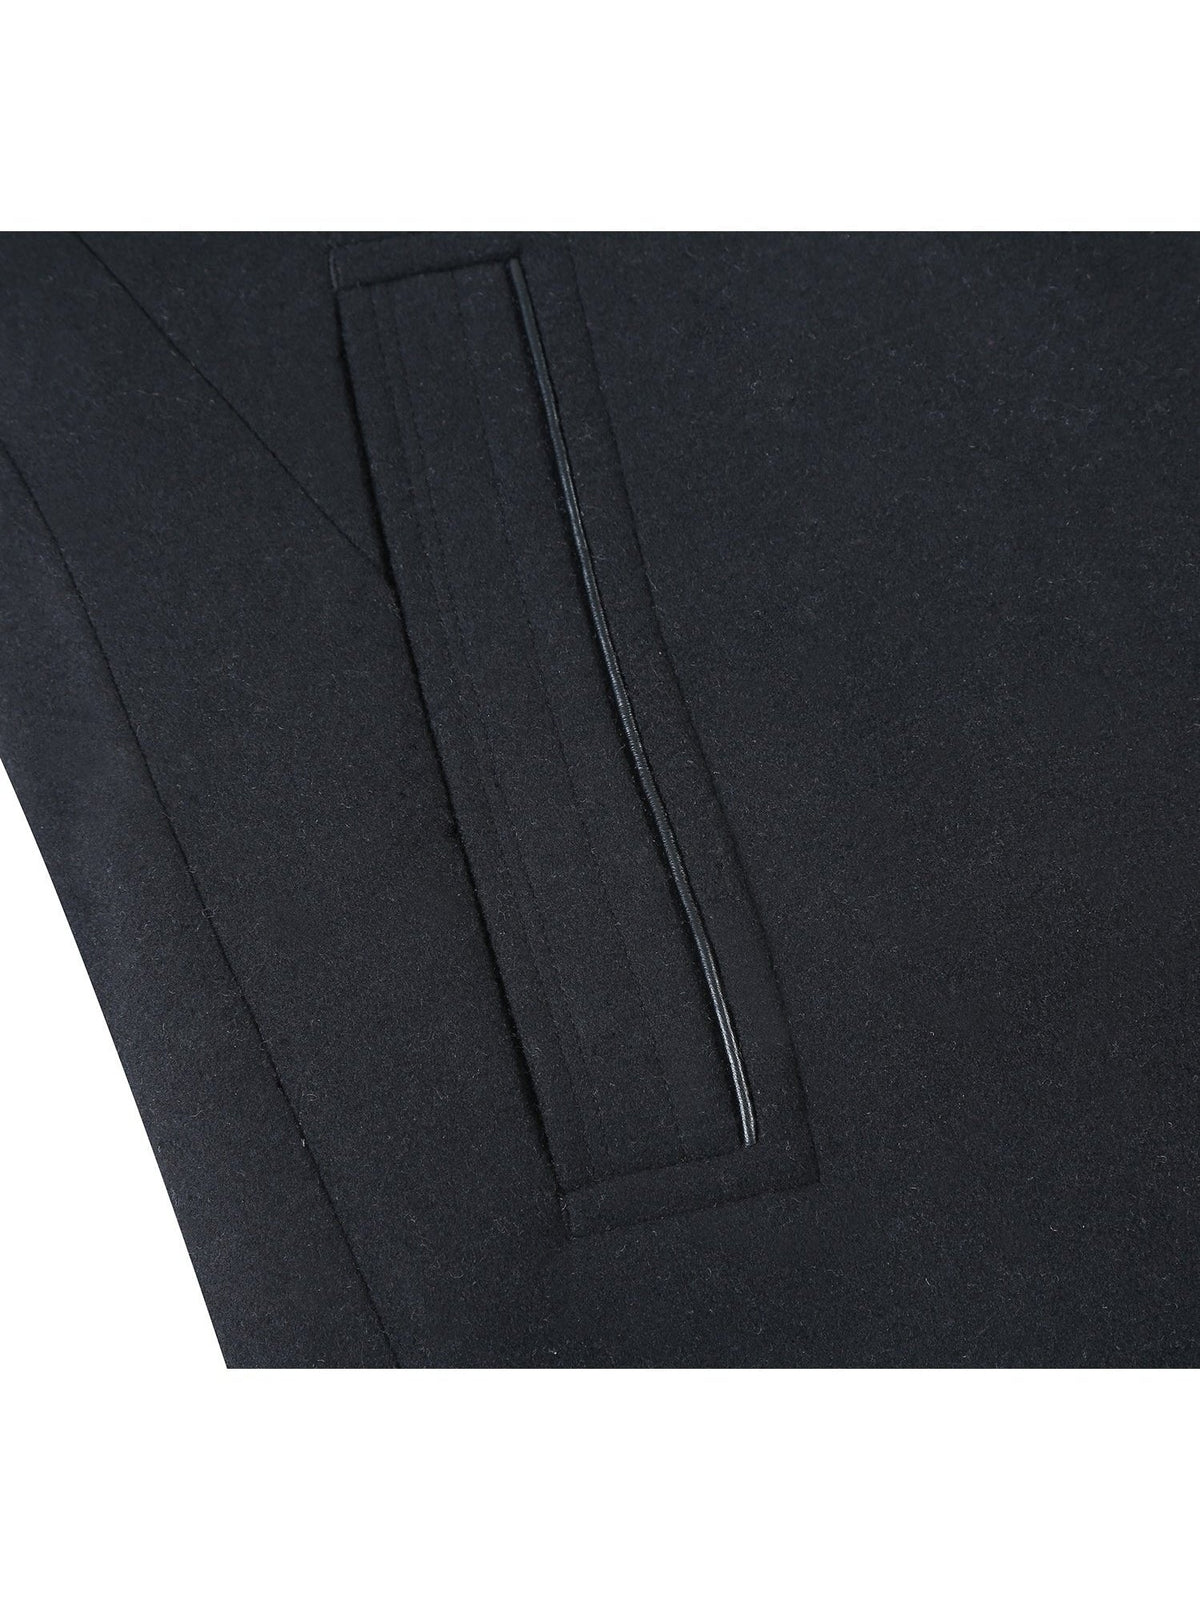 Raphael Solid Black Wool Blend Short Coat